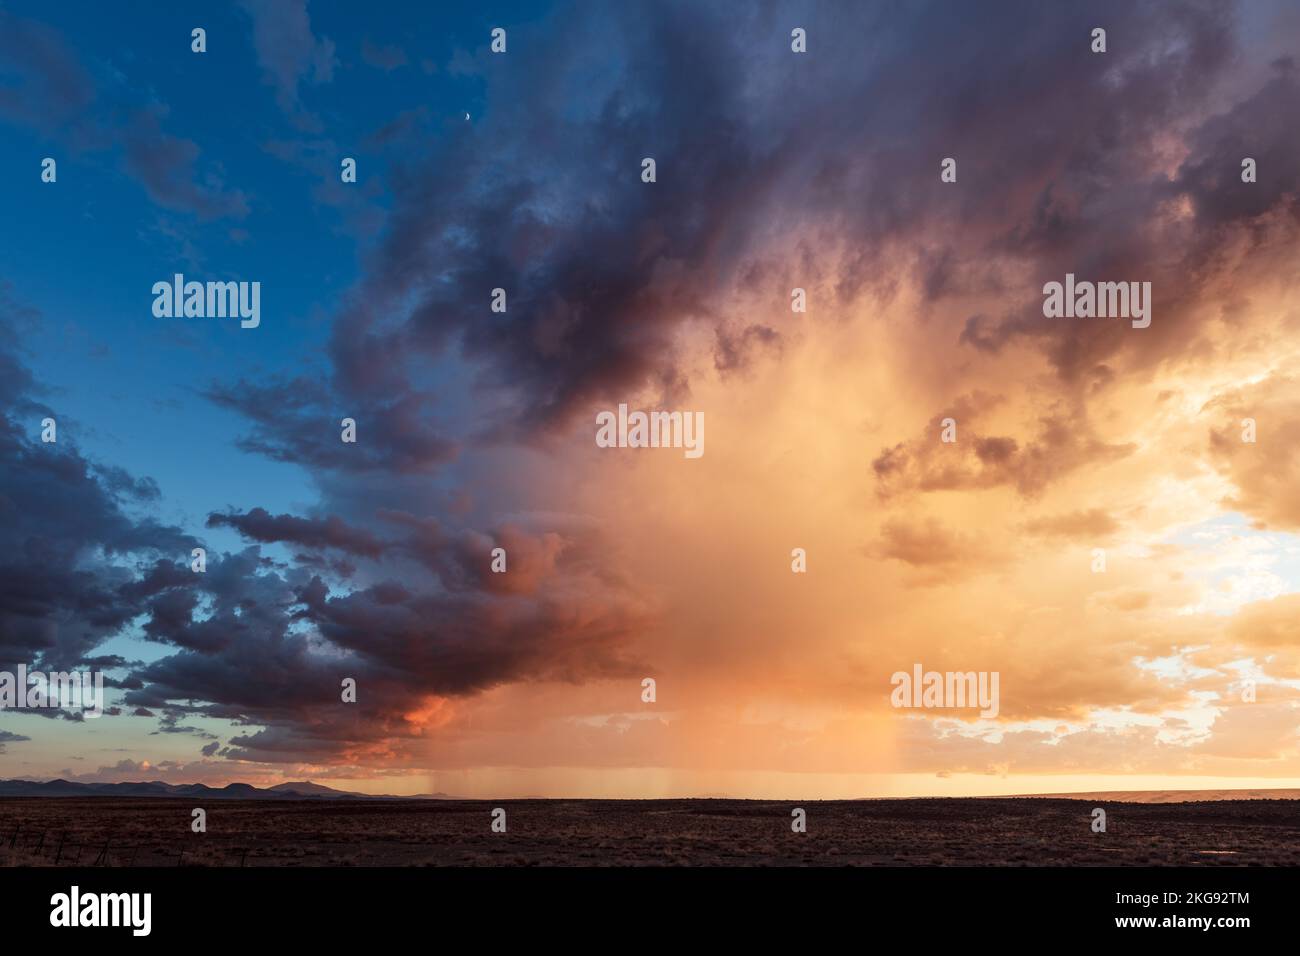 Stormy sunset sky with dramatic clouds near Flagstaff, Arizona Stock Photo